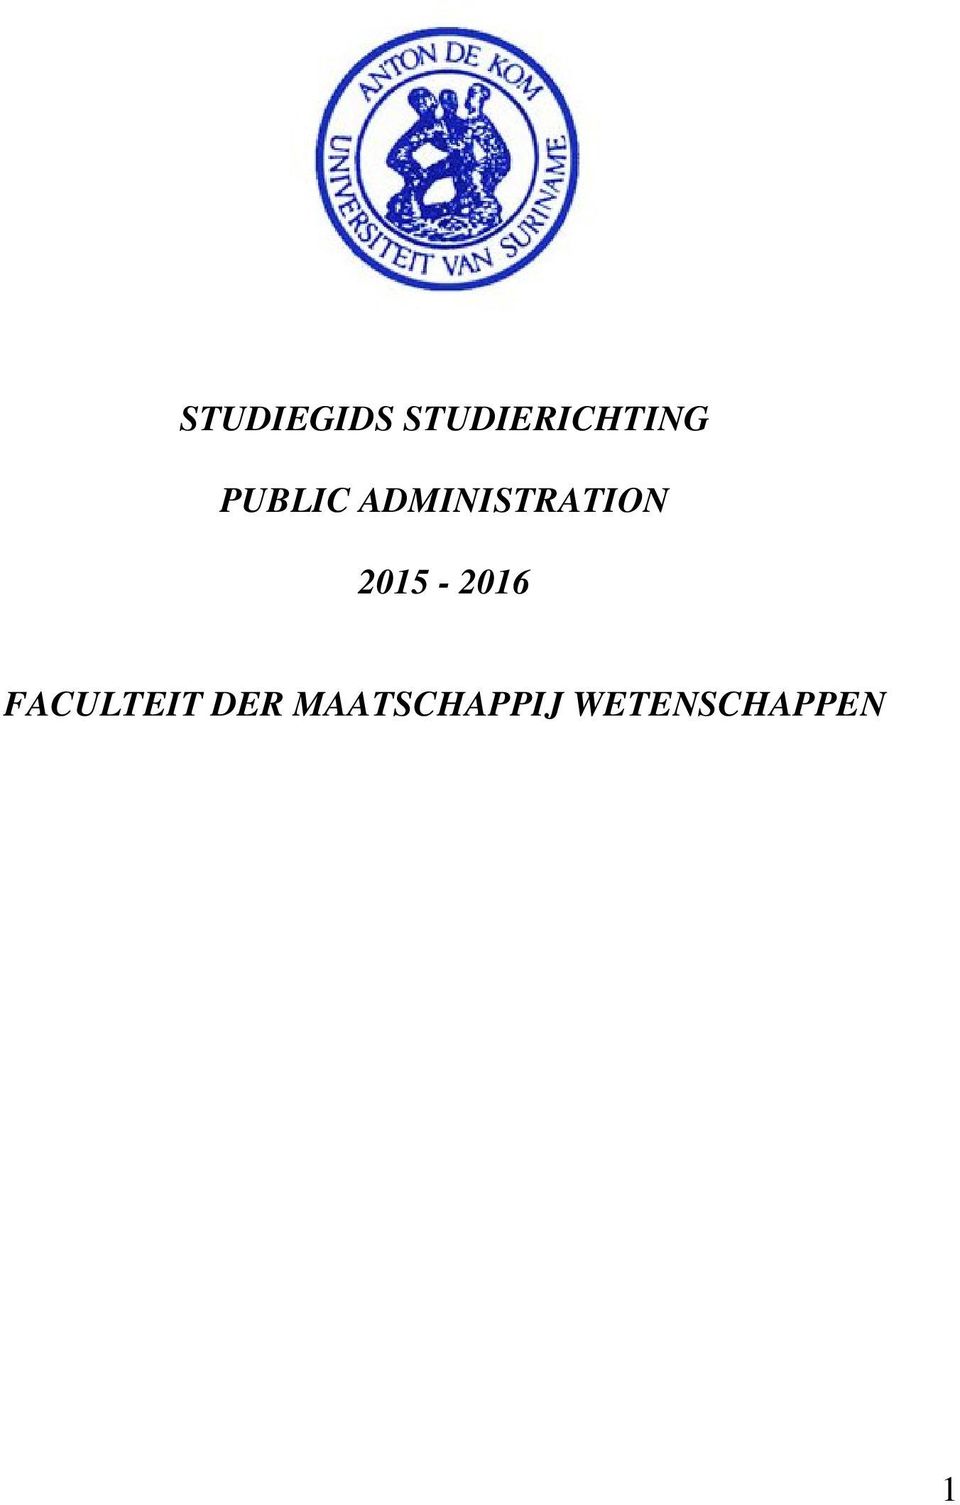 ADMINISTRATION 2015-2016